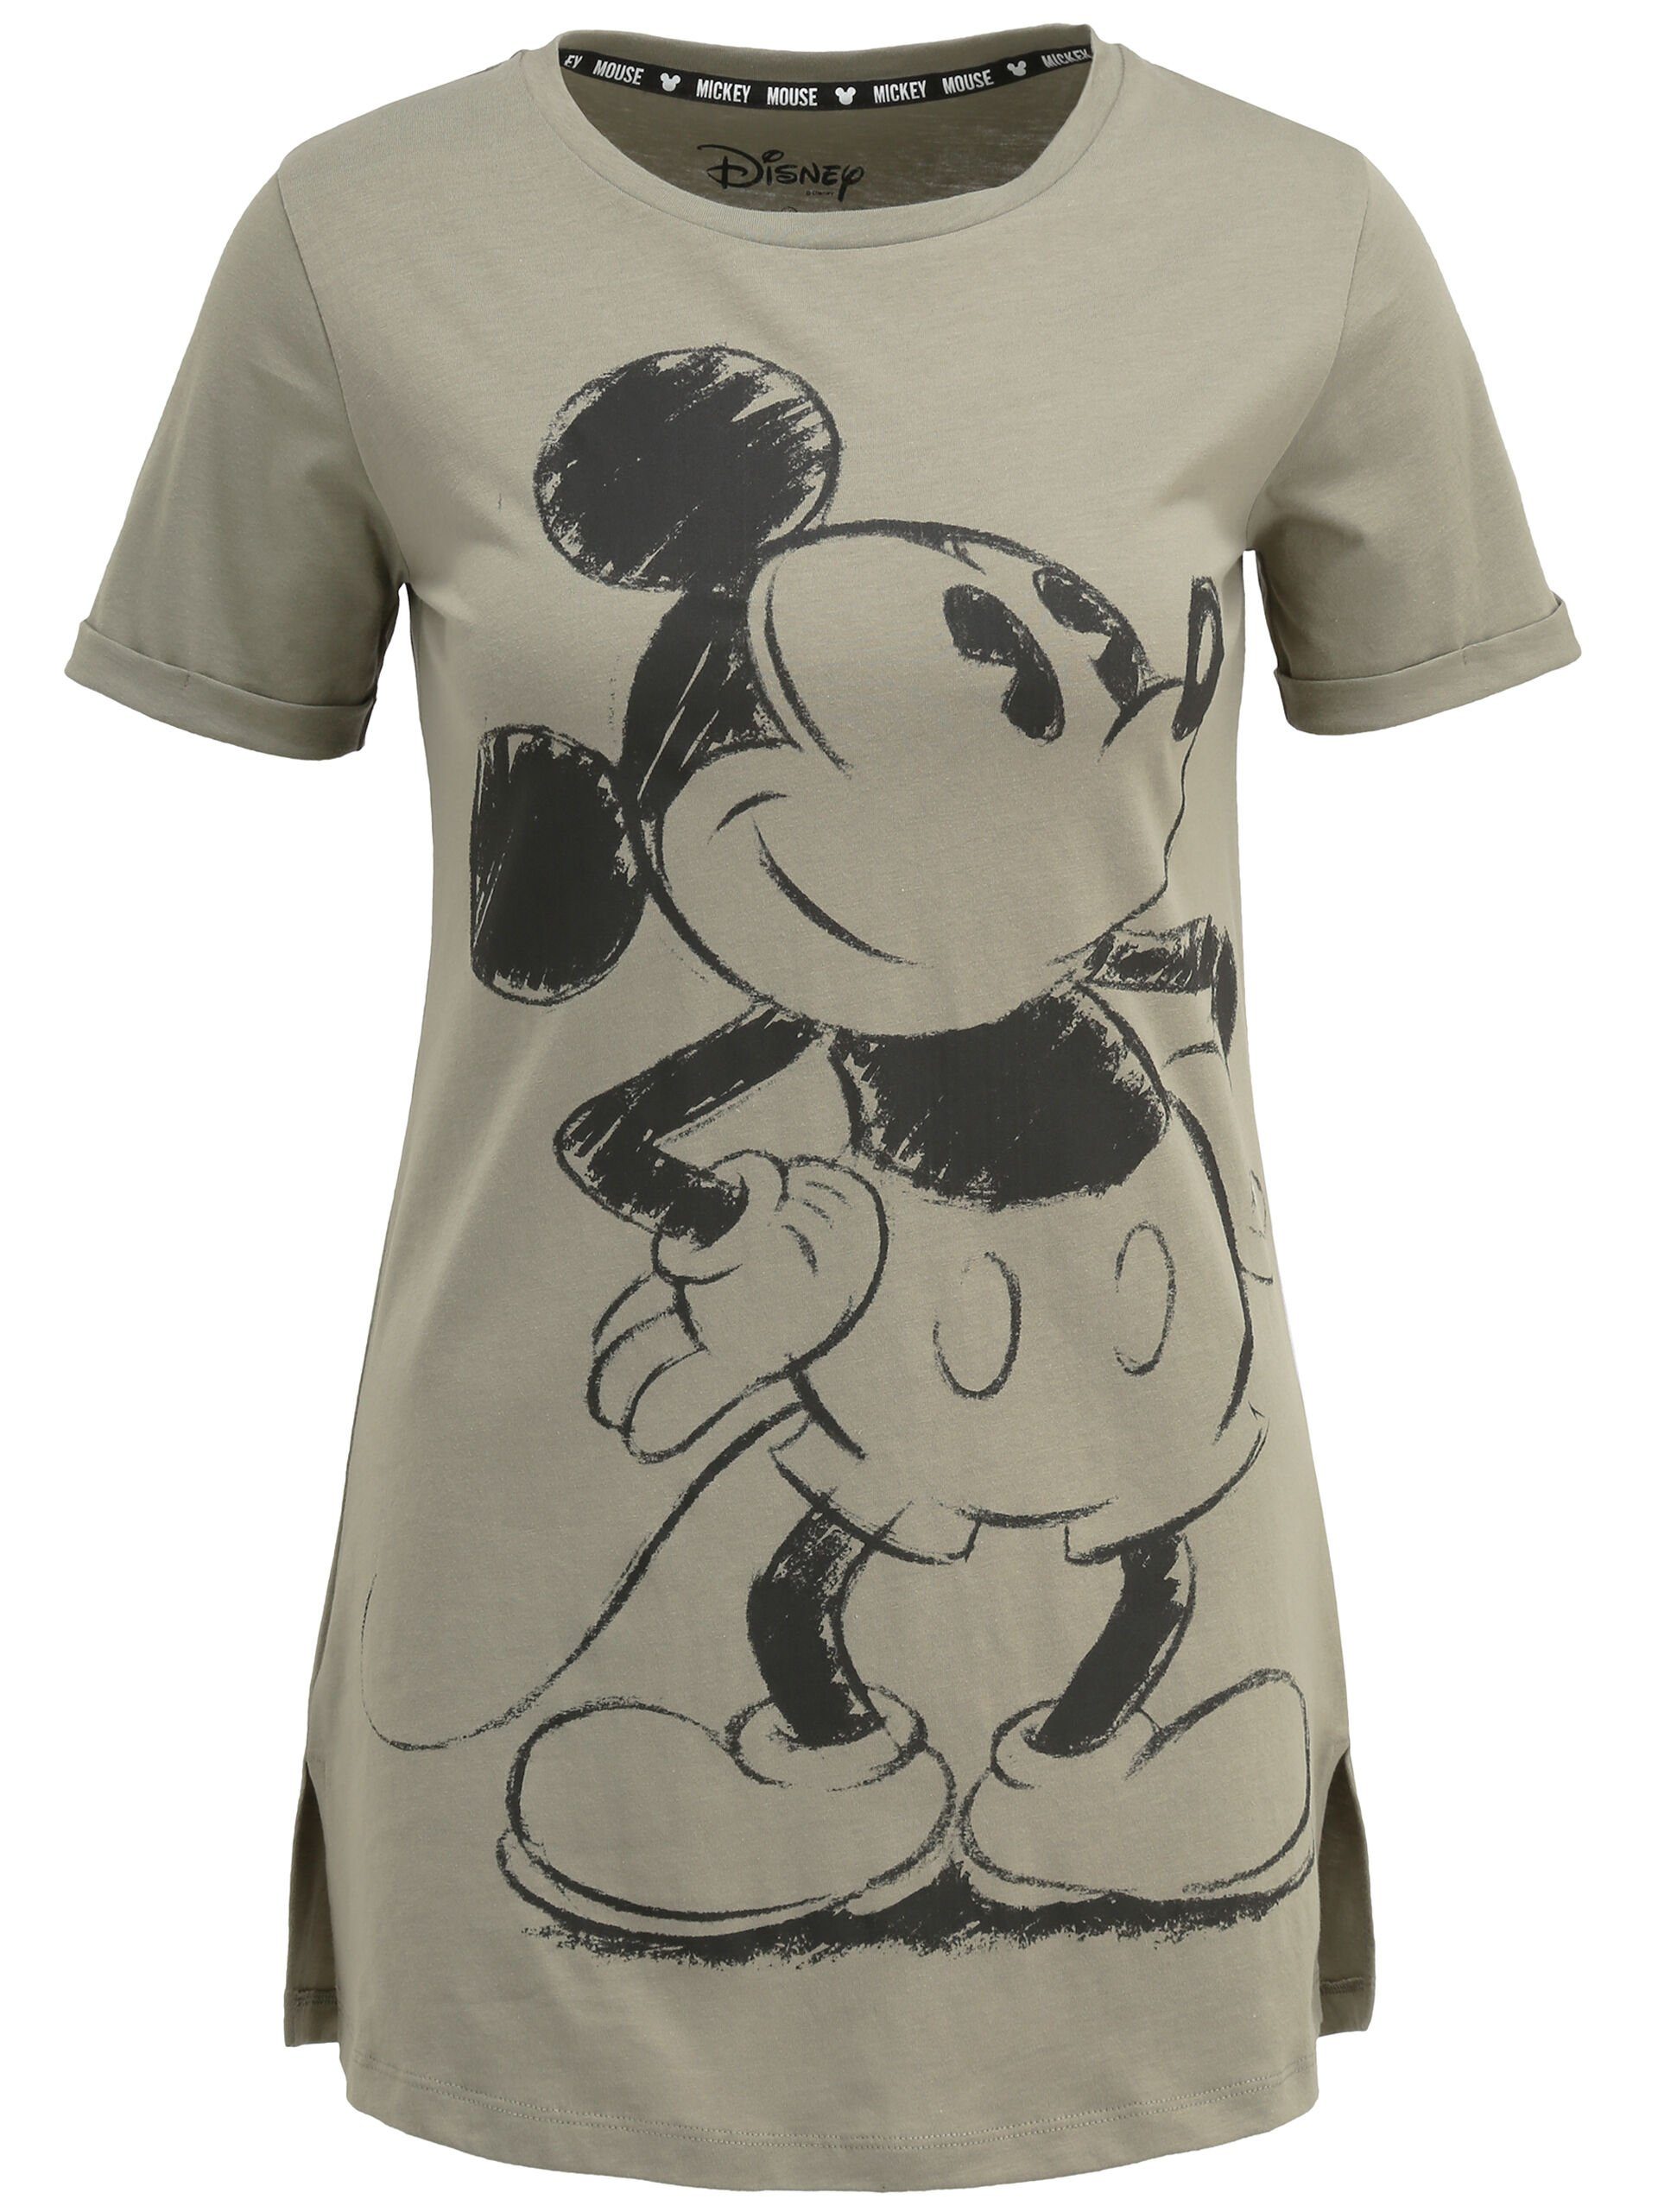 COURSE Longshirt Mickey Mouse khaki